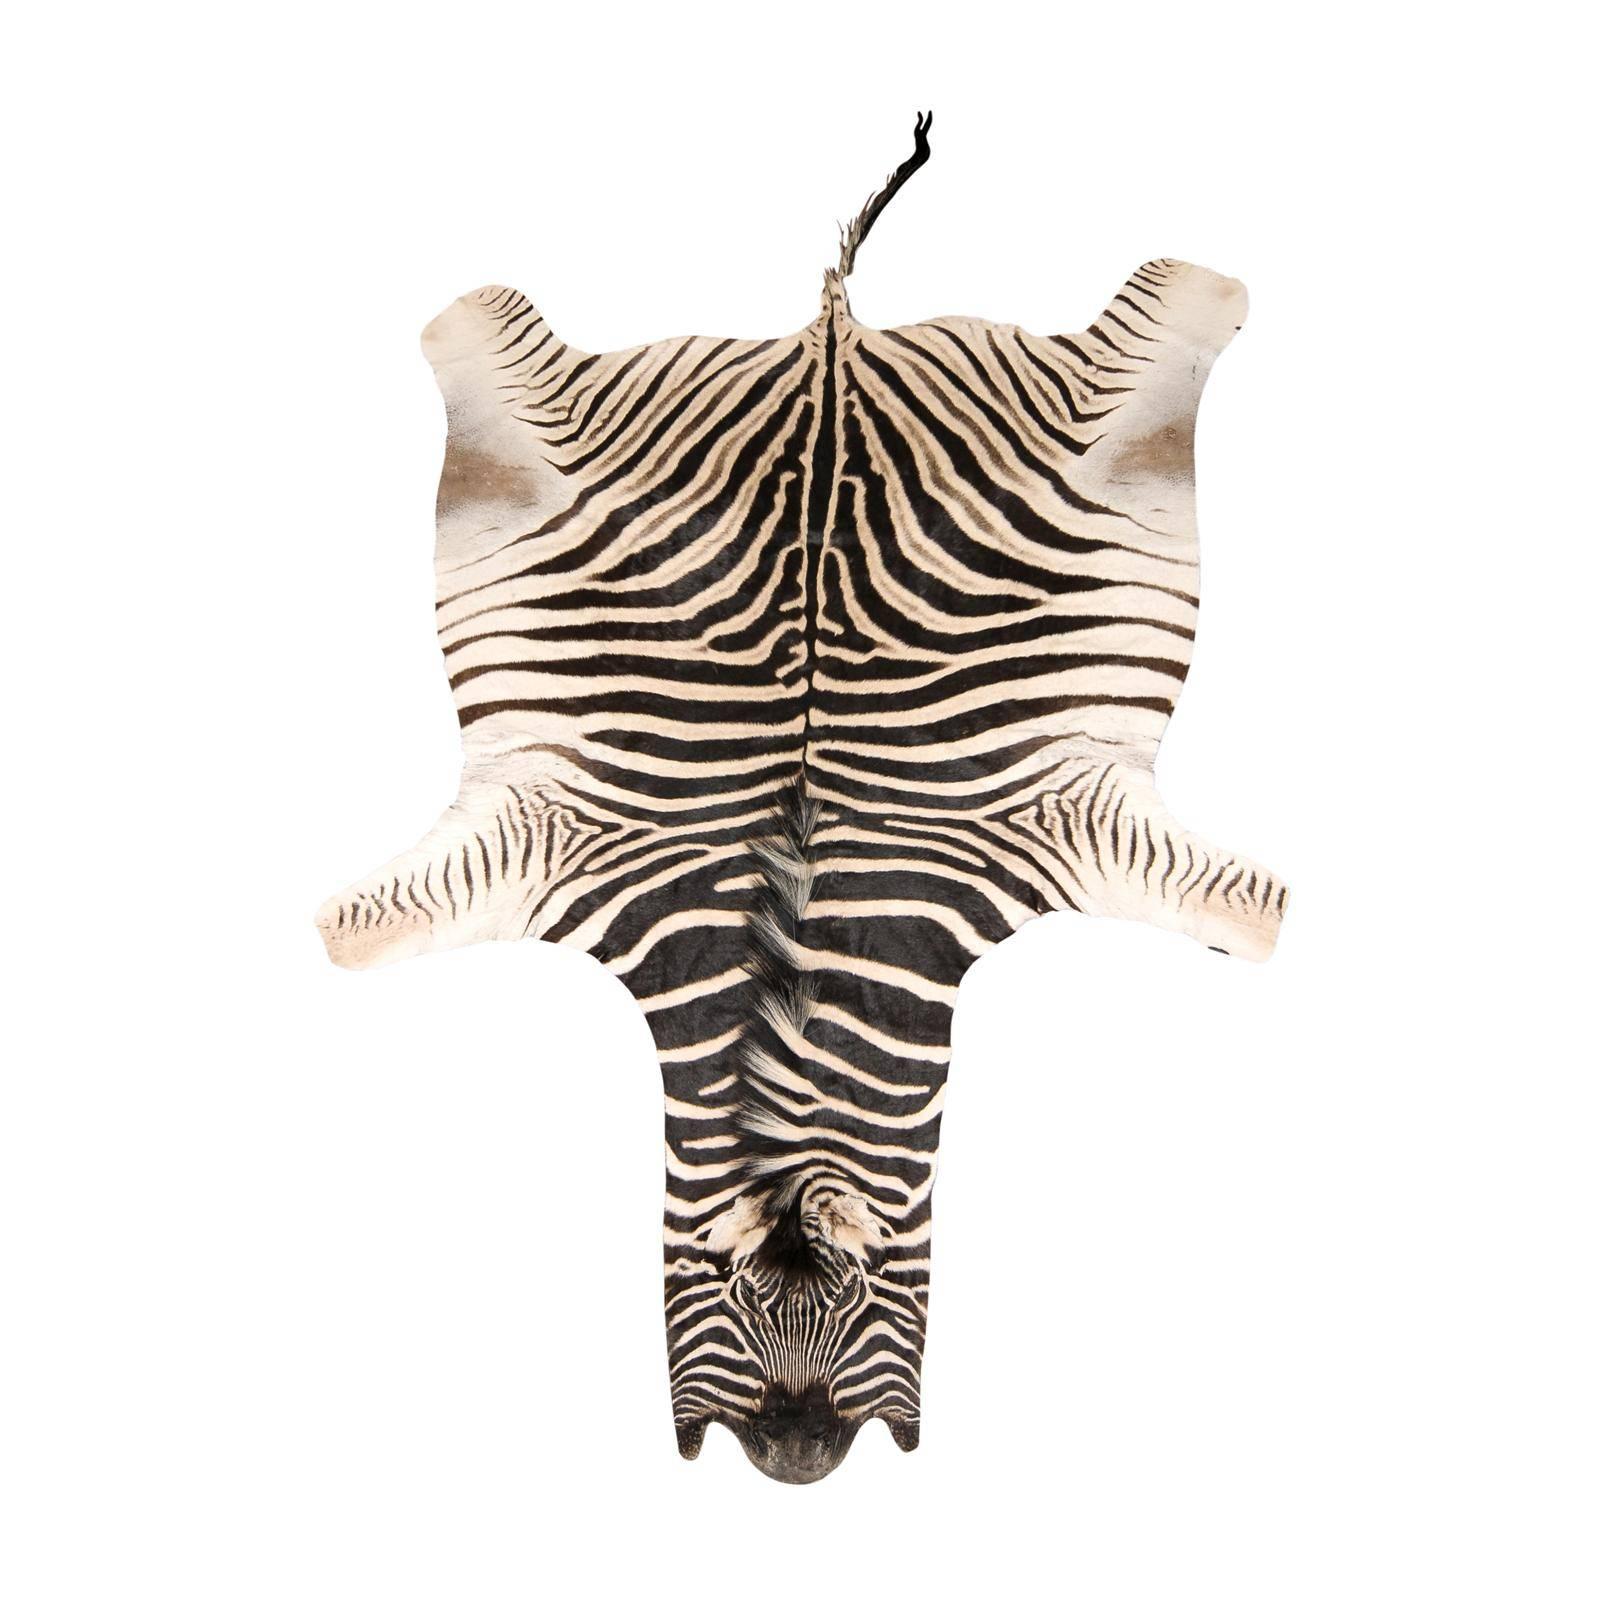 Authentic Zebra Skin Rug